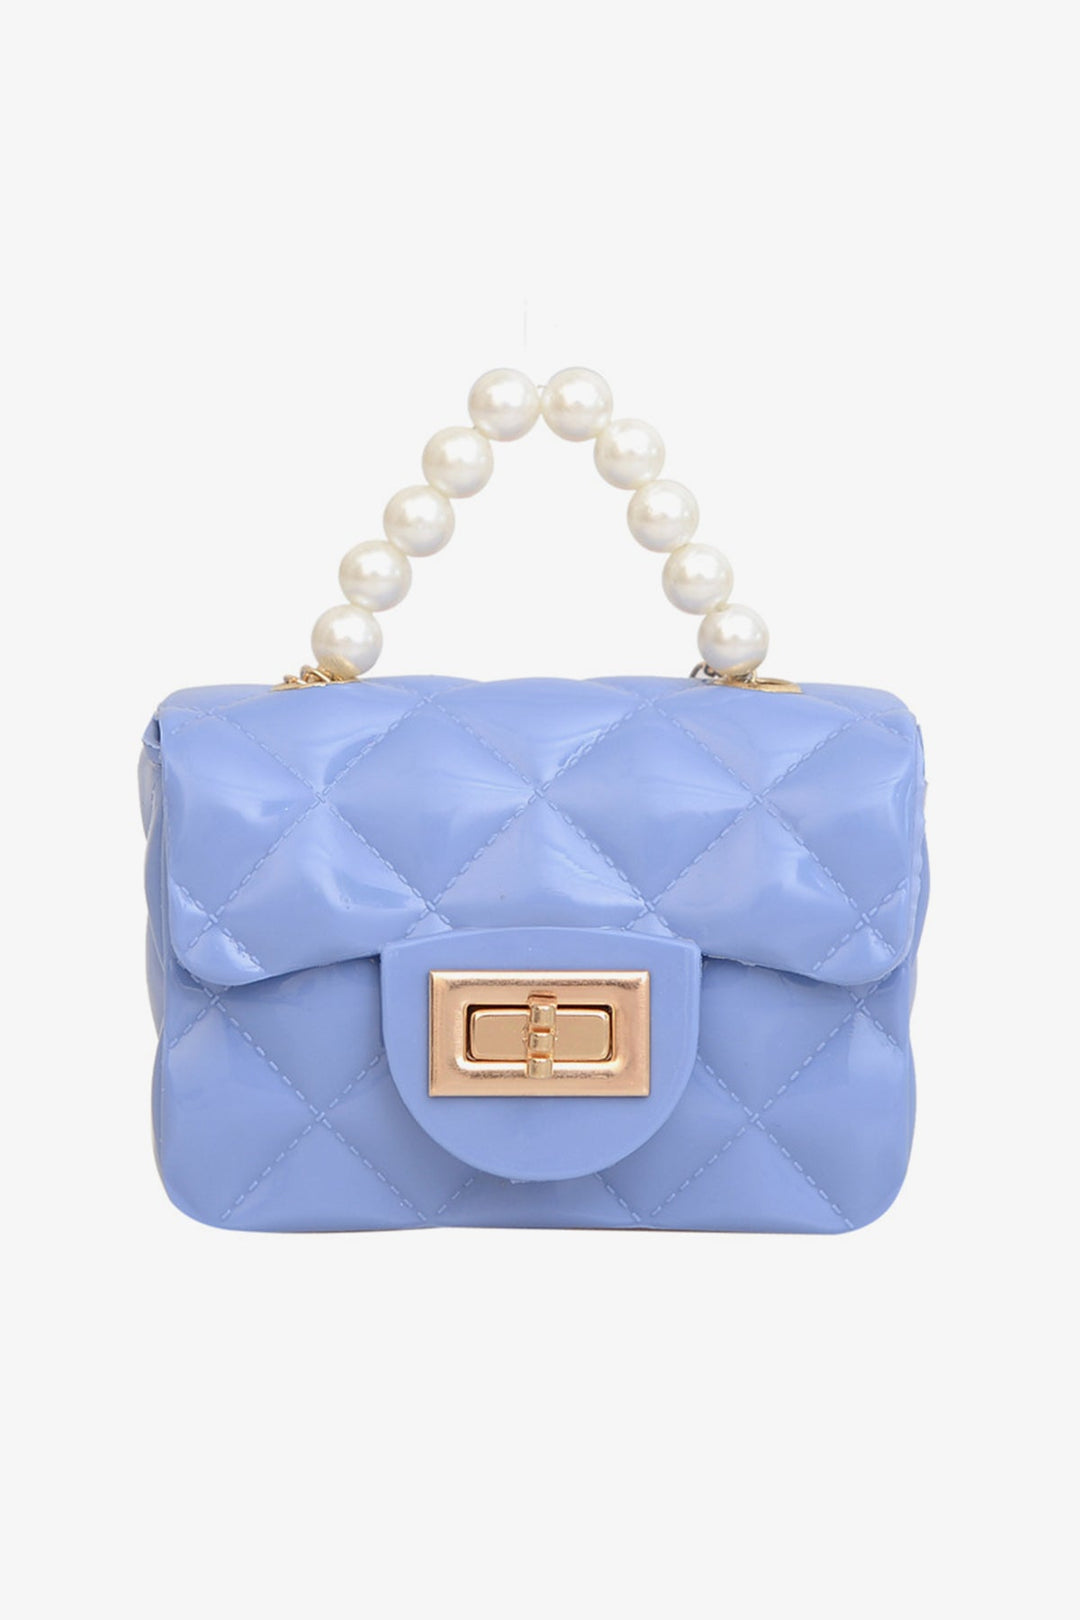 Mini Pearl Blue Bag - A23 - WHB0044